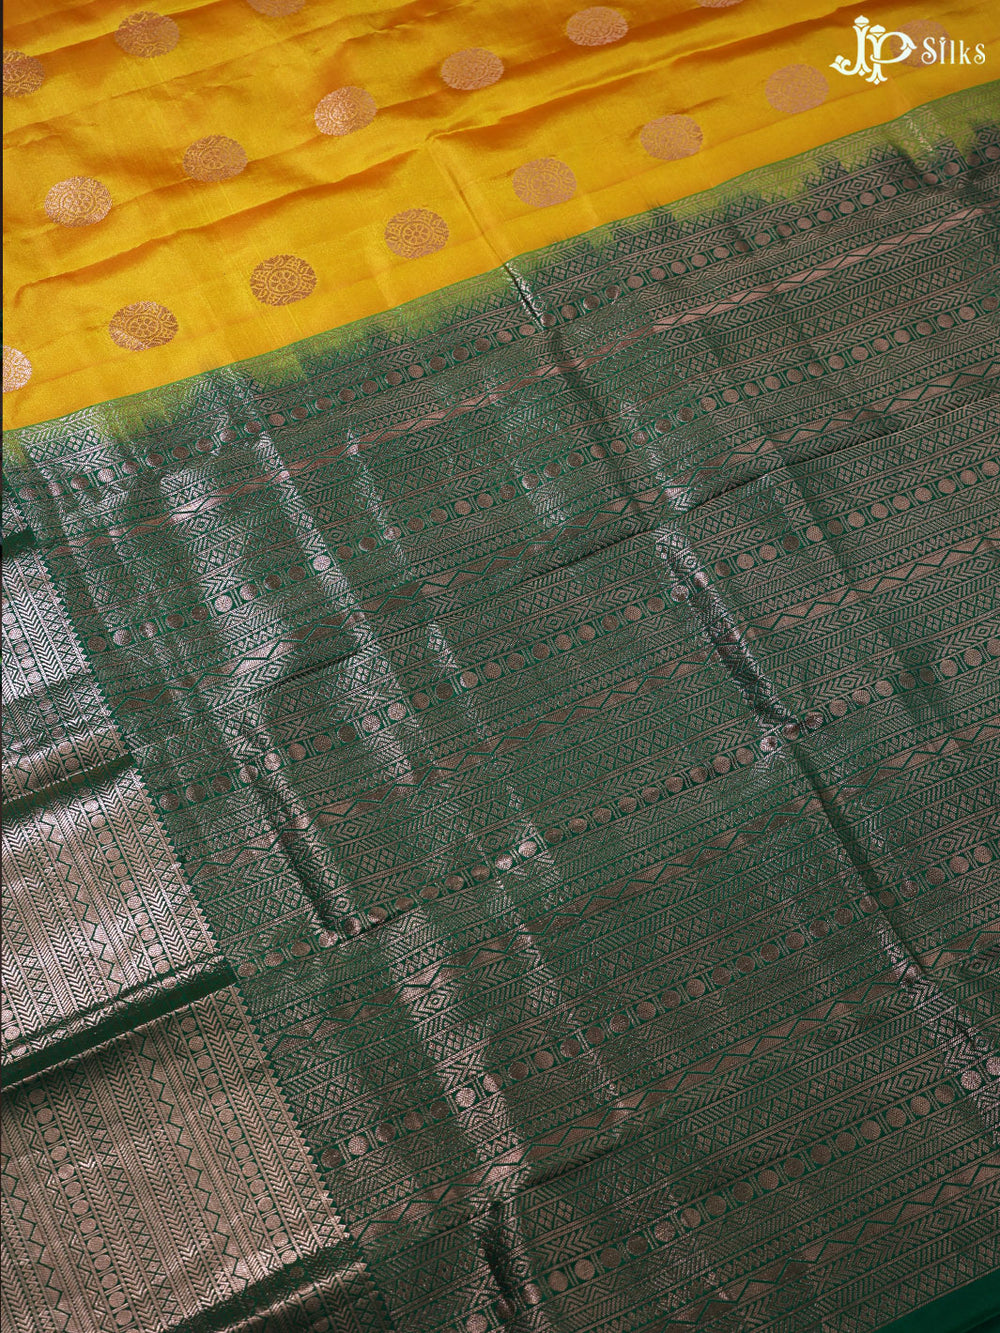 Yellow and Green Dharmavaram silk - D4753 - View 1